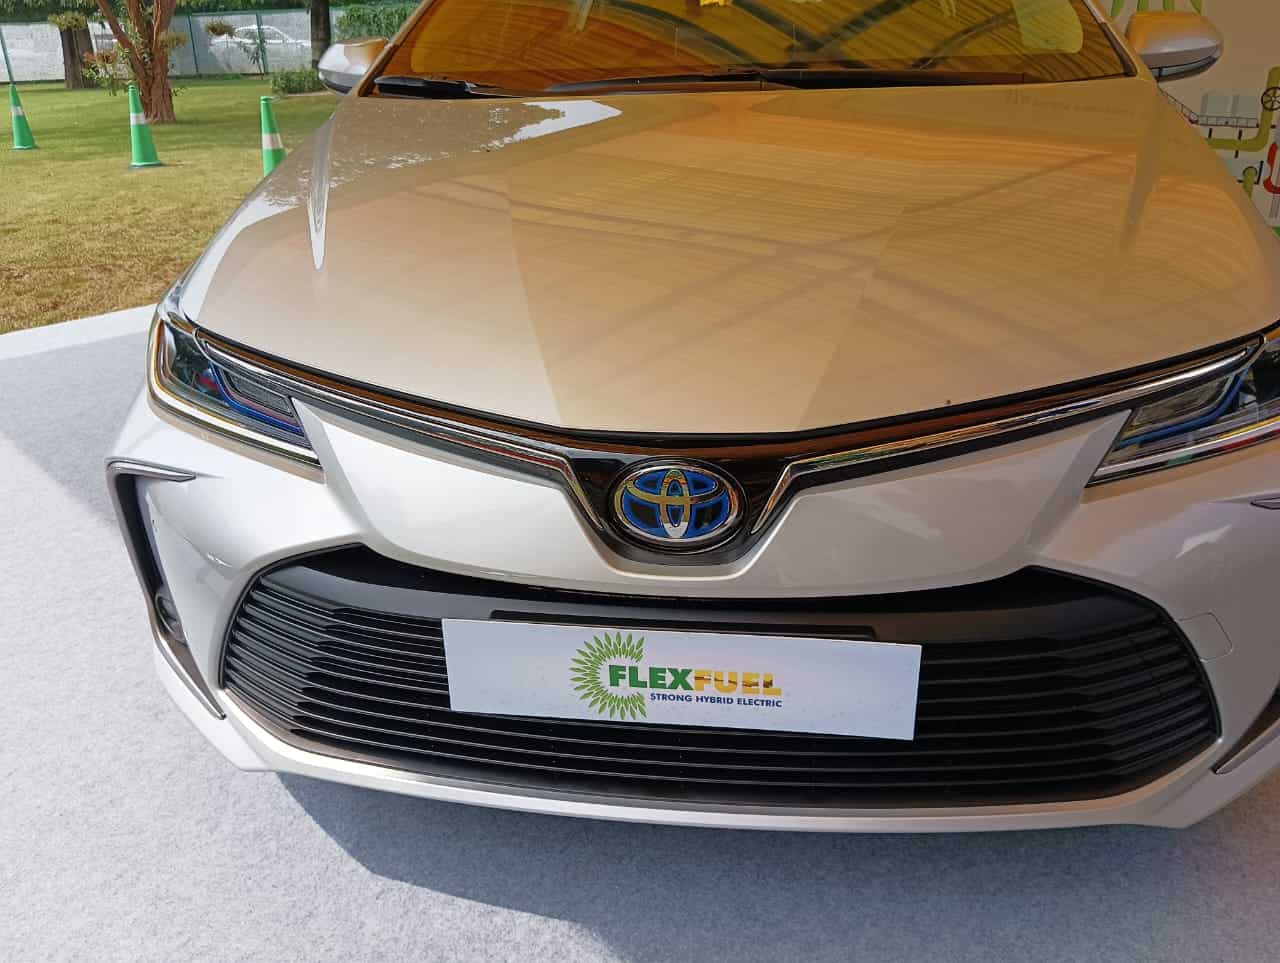 Toyota Corolla Altis Hybrid: Features